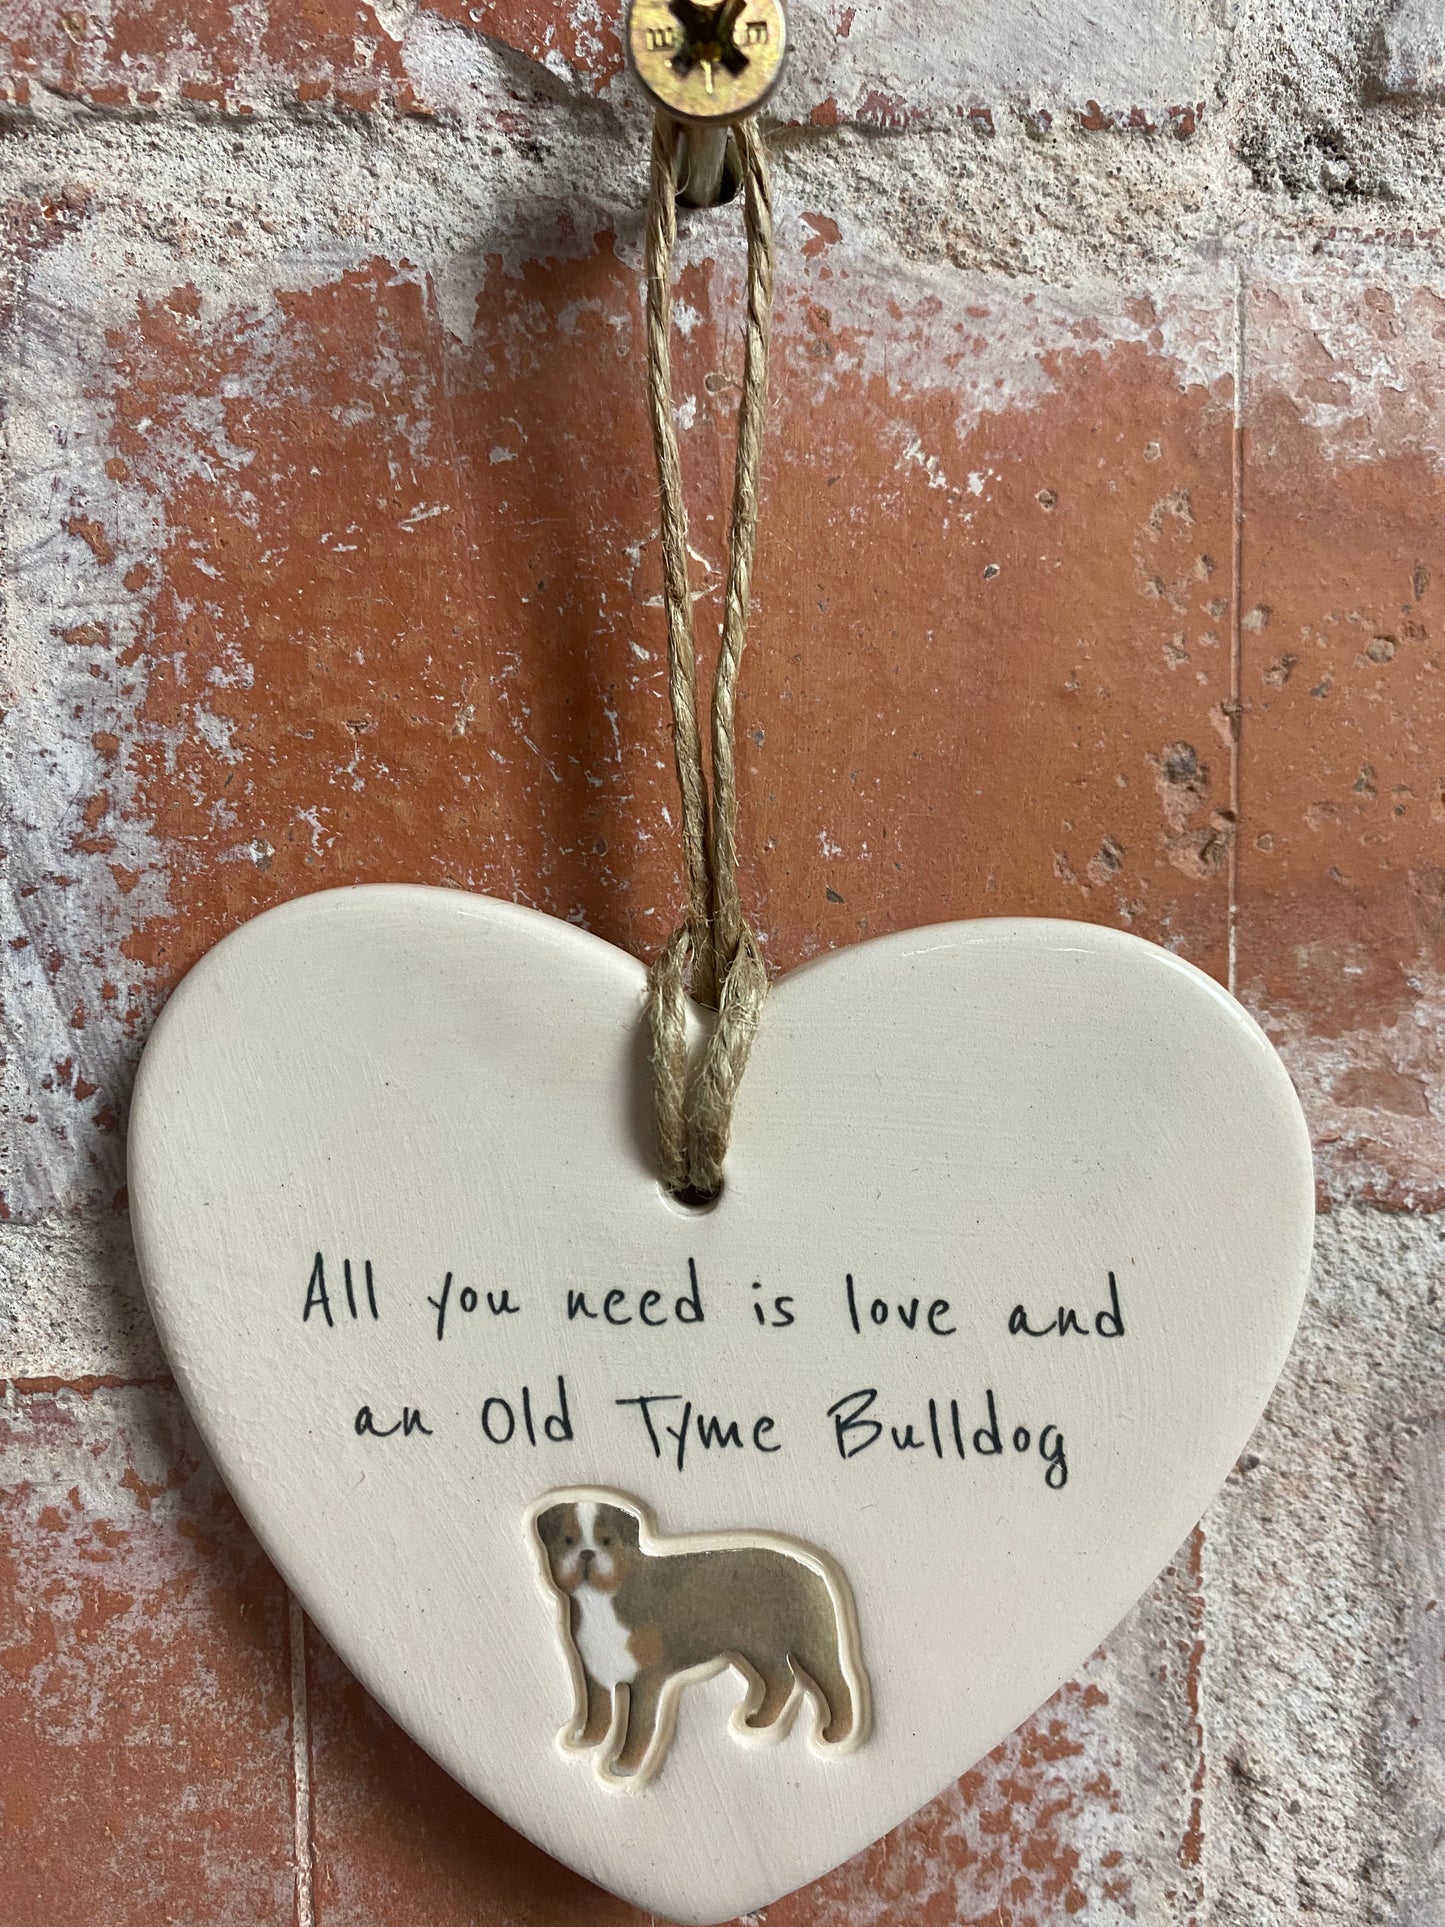 Old Tyme Bulldog ceramic heart